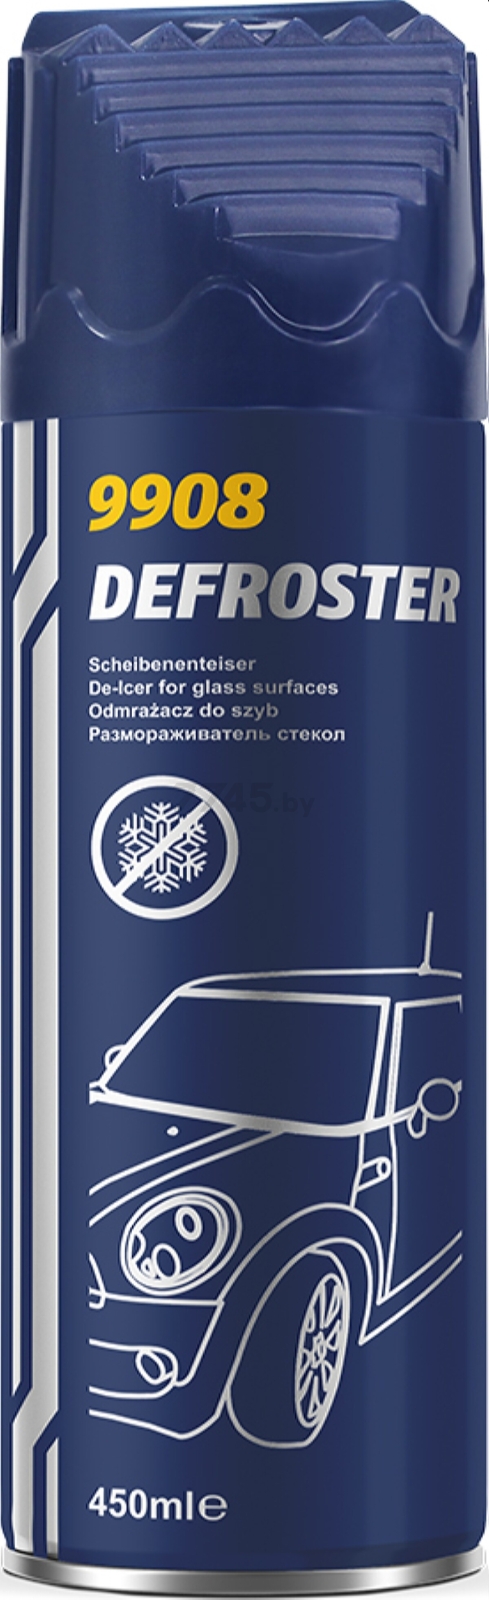 Размораживатель стекол MANNOL 9908 Defroster 450 мл (99109)